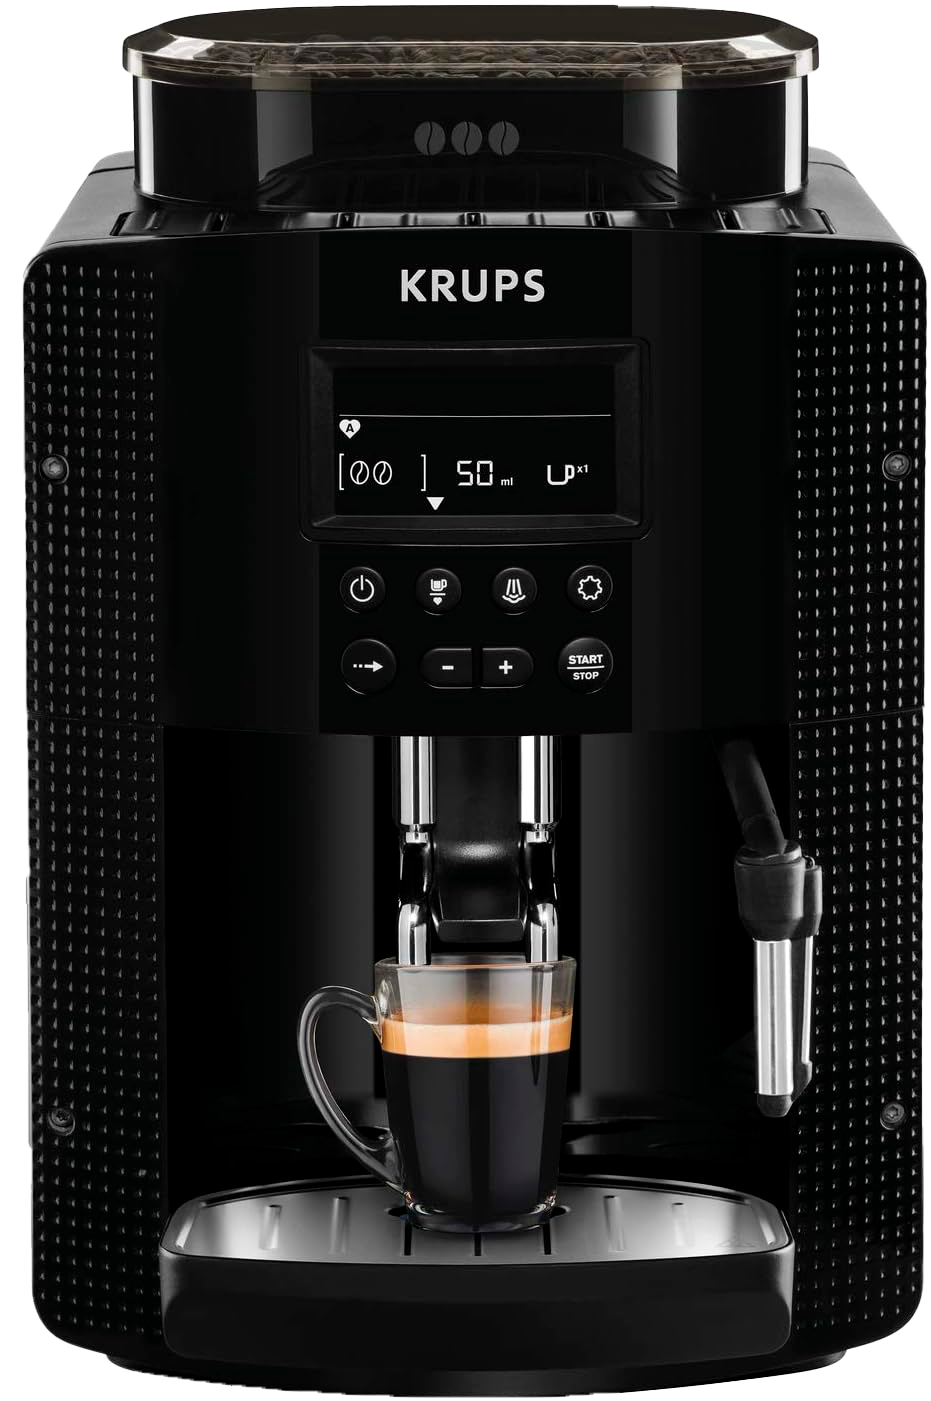 Cafetera Krups Virtuoso. Tutorial de uso 